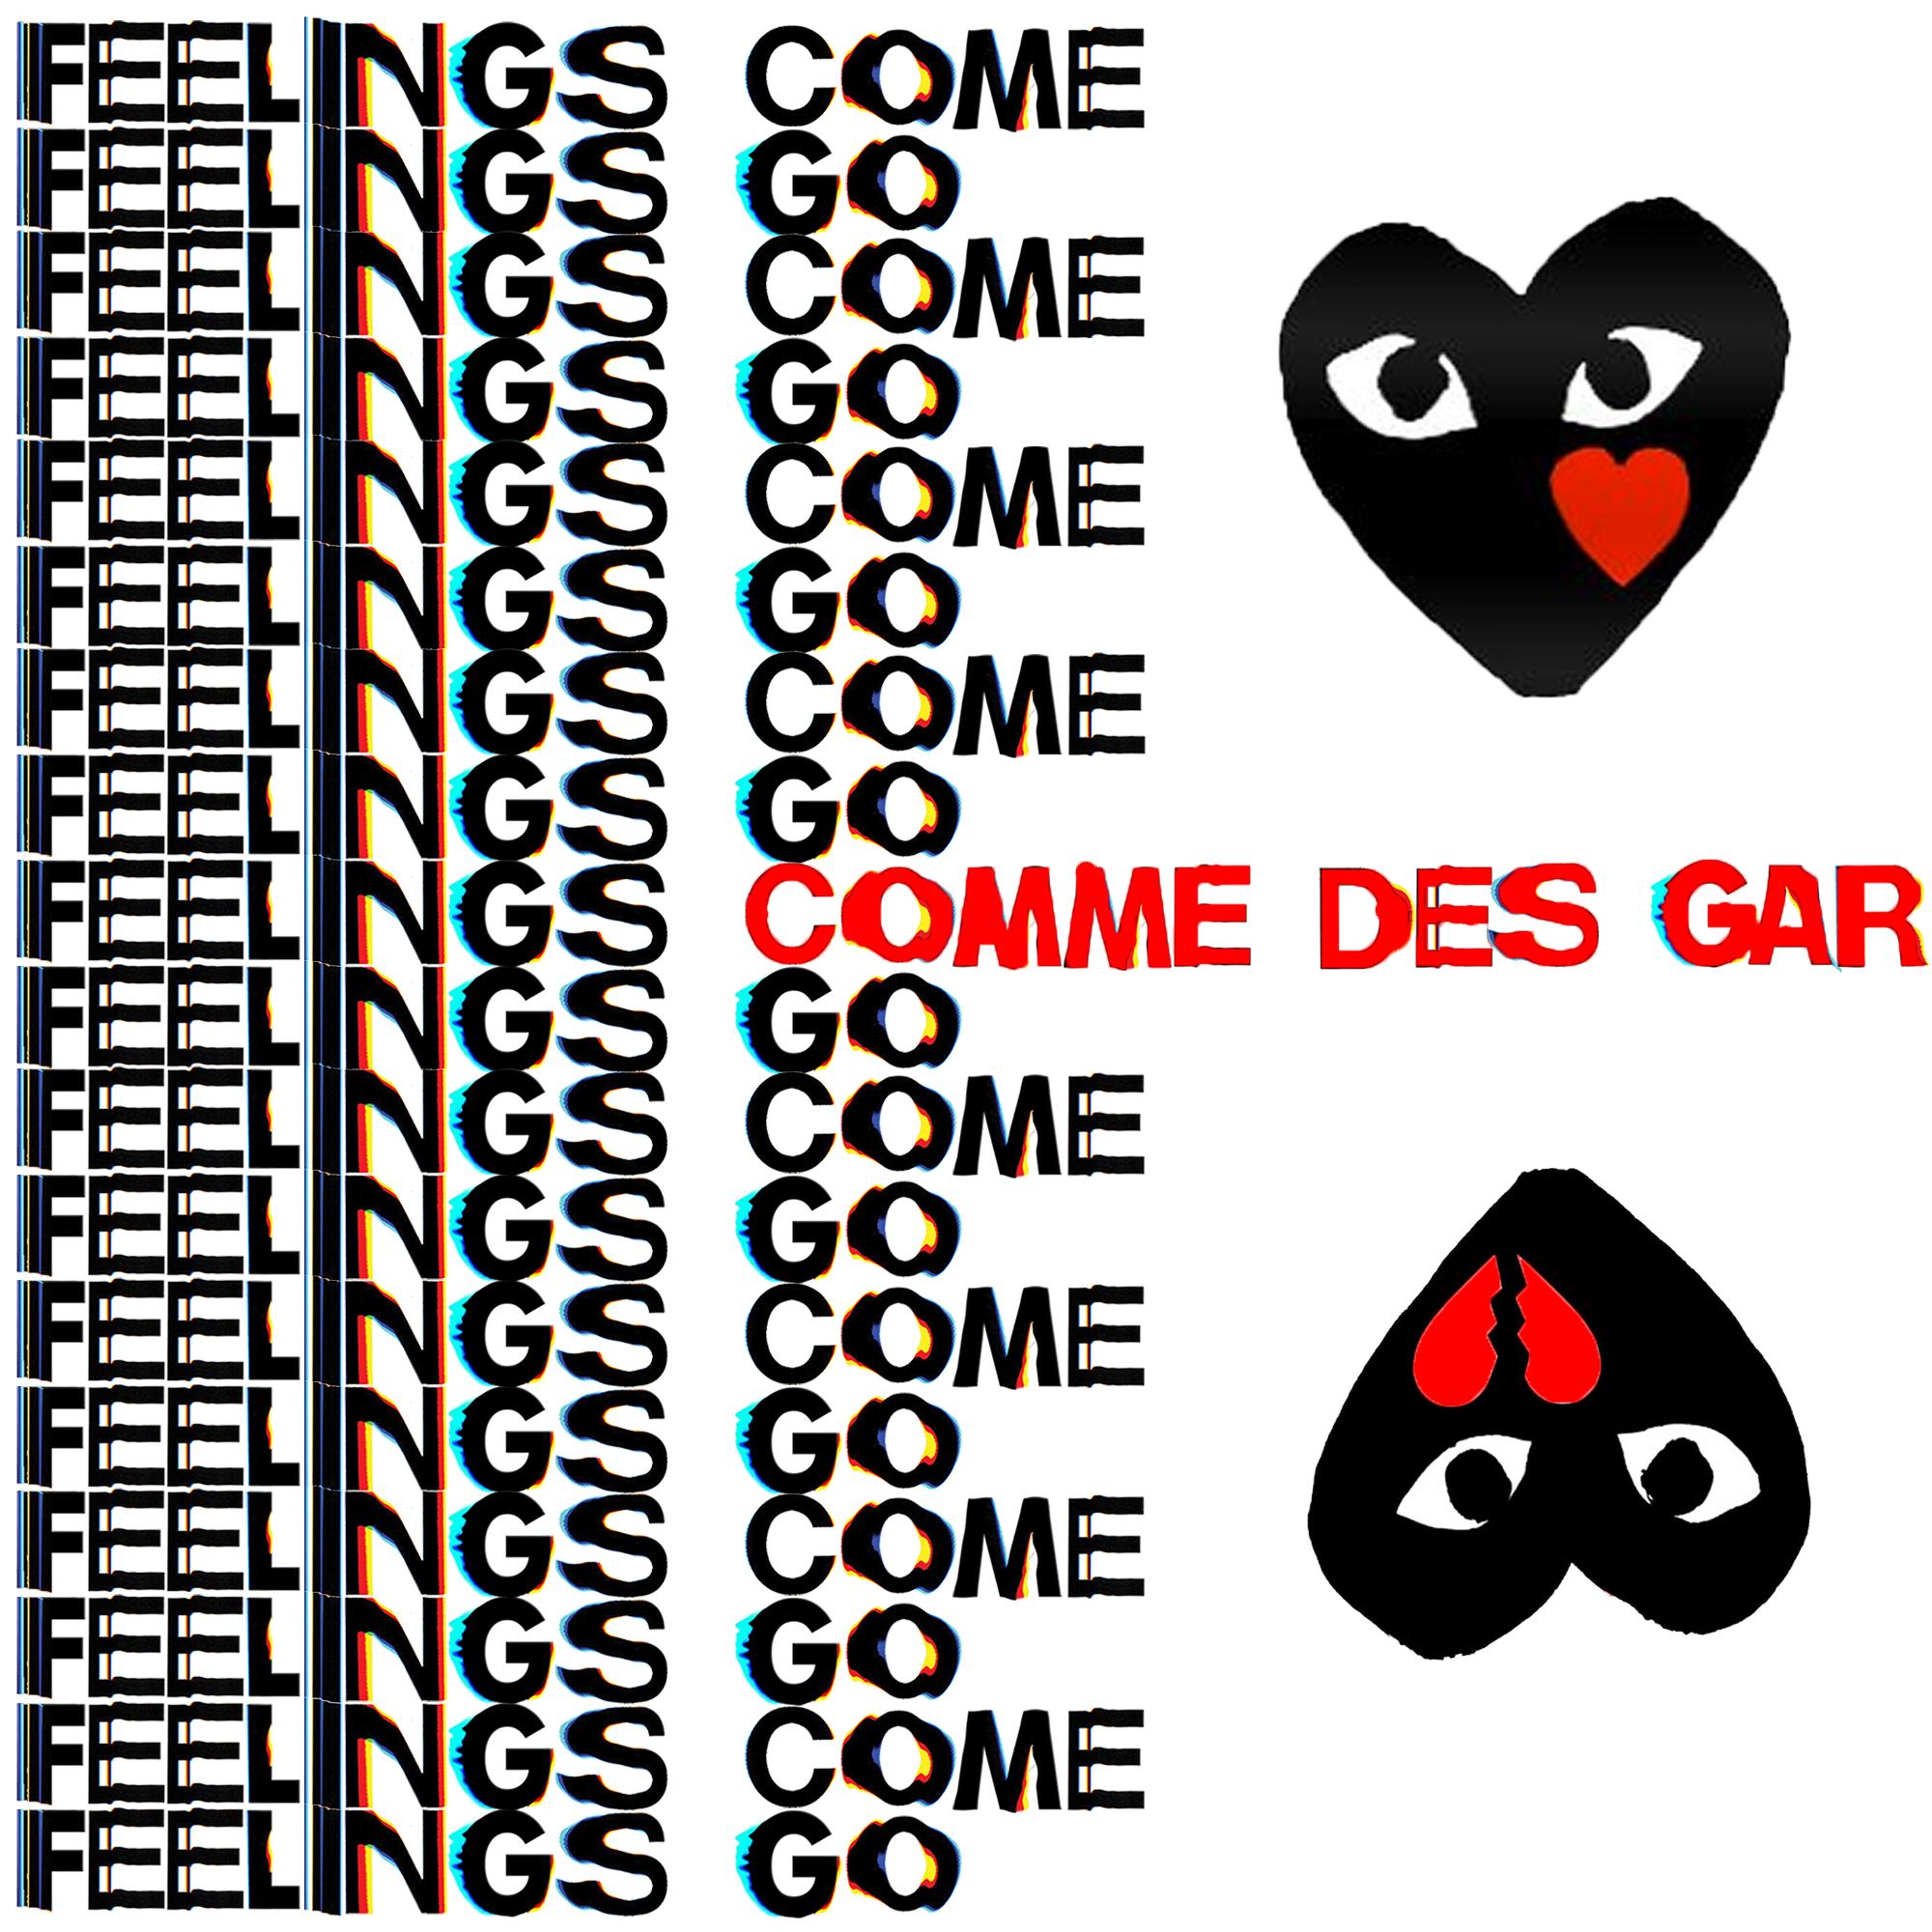 Broken Comme des Garcons by louismoncler on DeviantArt